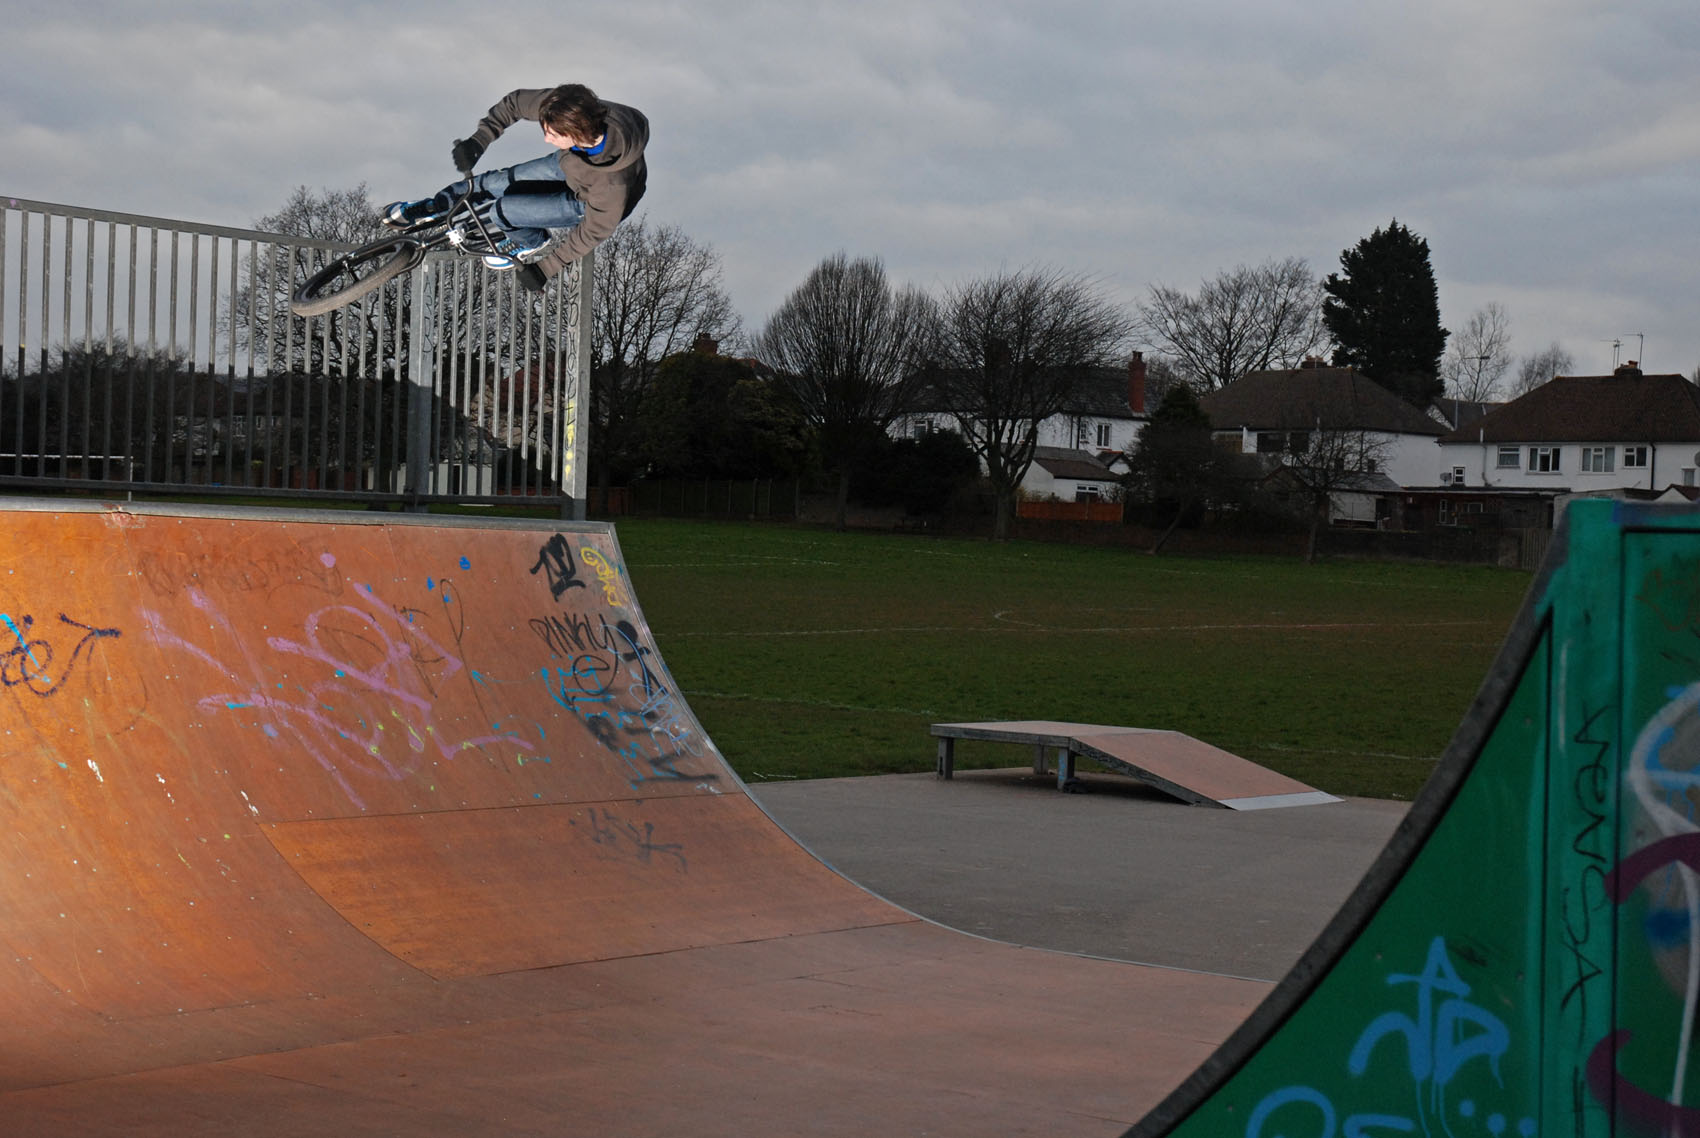 llanishen skatepark review tips skateboarding in cardiff u k